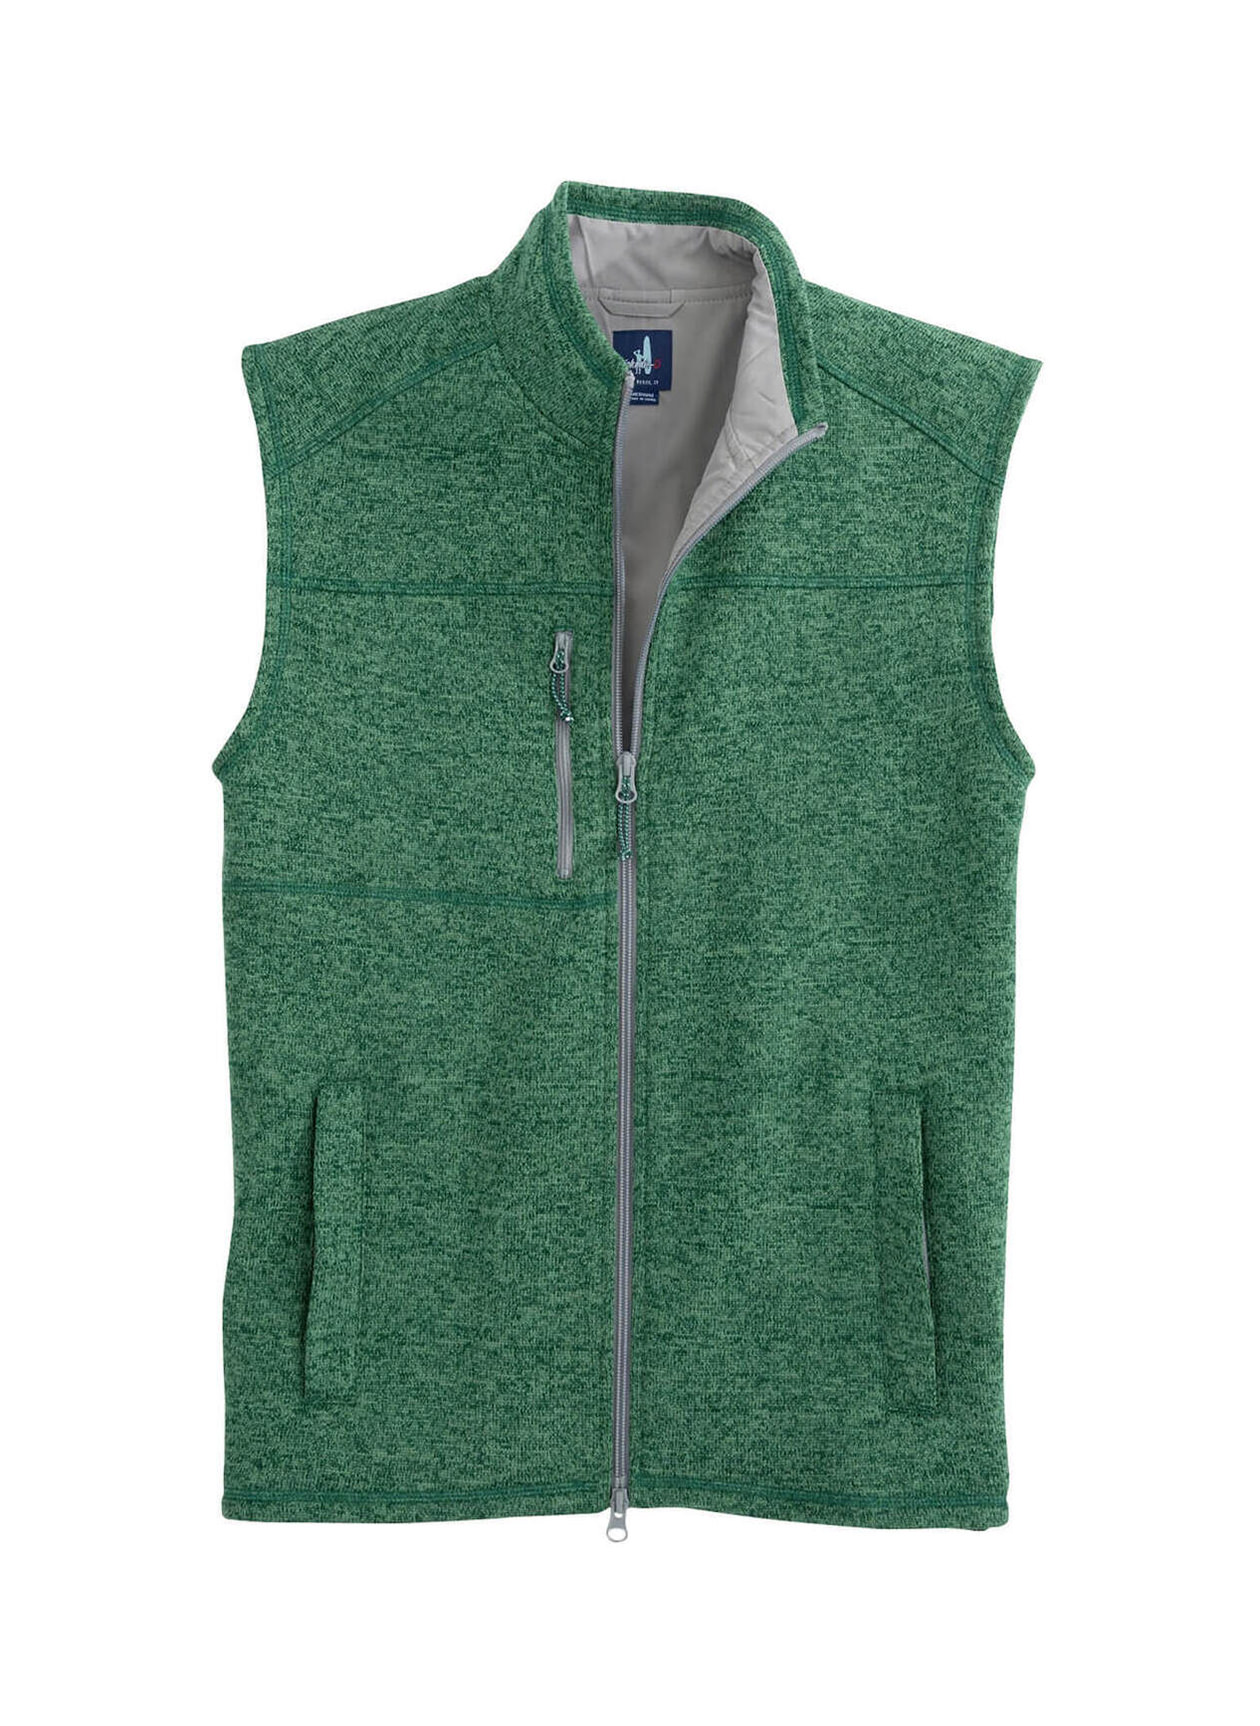 Vineyard Vines Tampa Bay Rays Mountain Sweater Fleece Vest